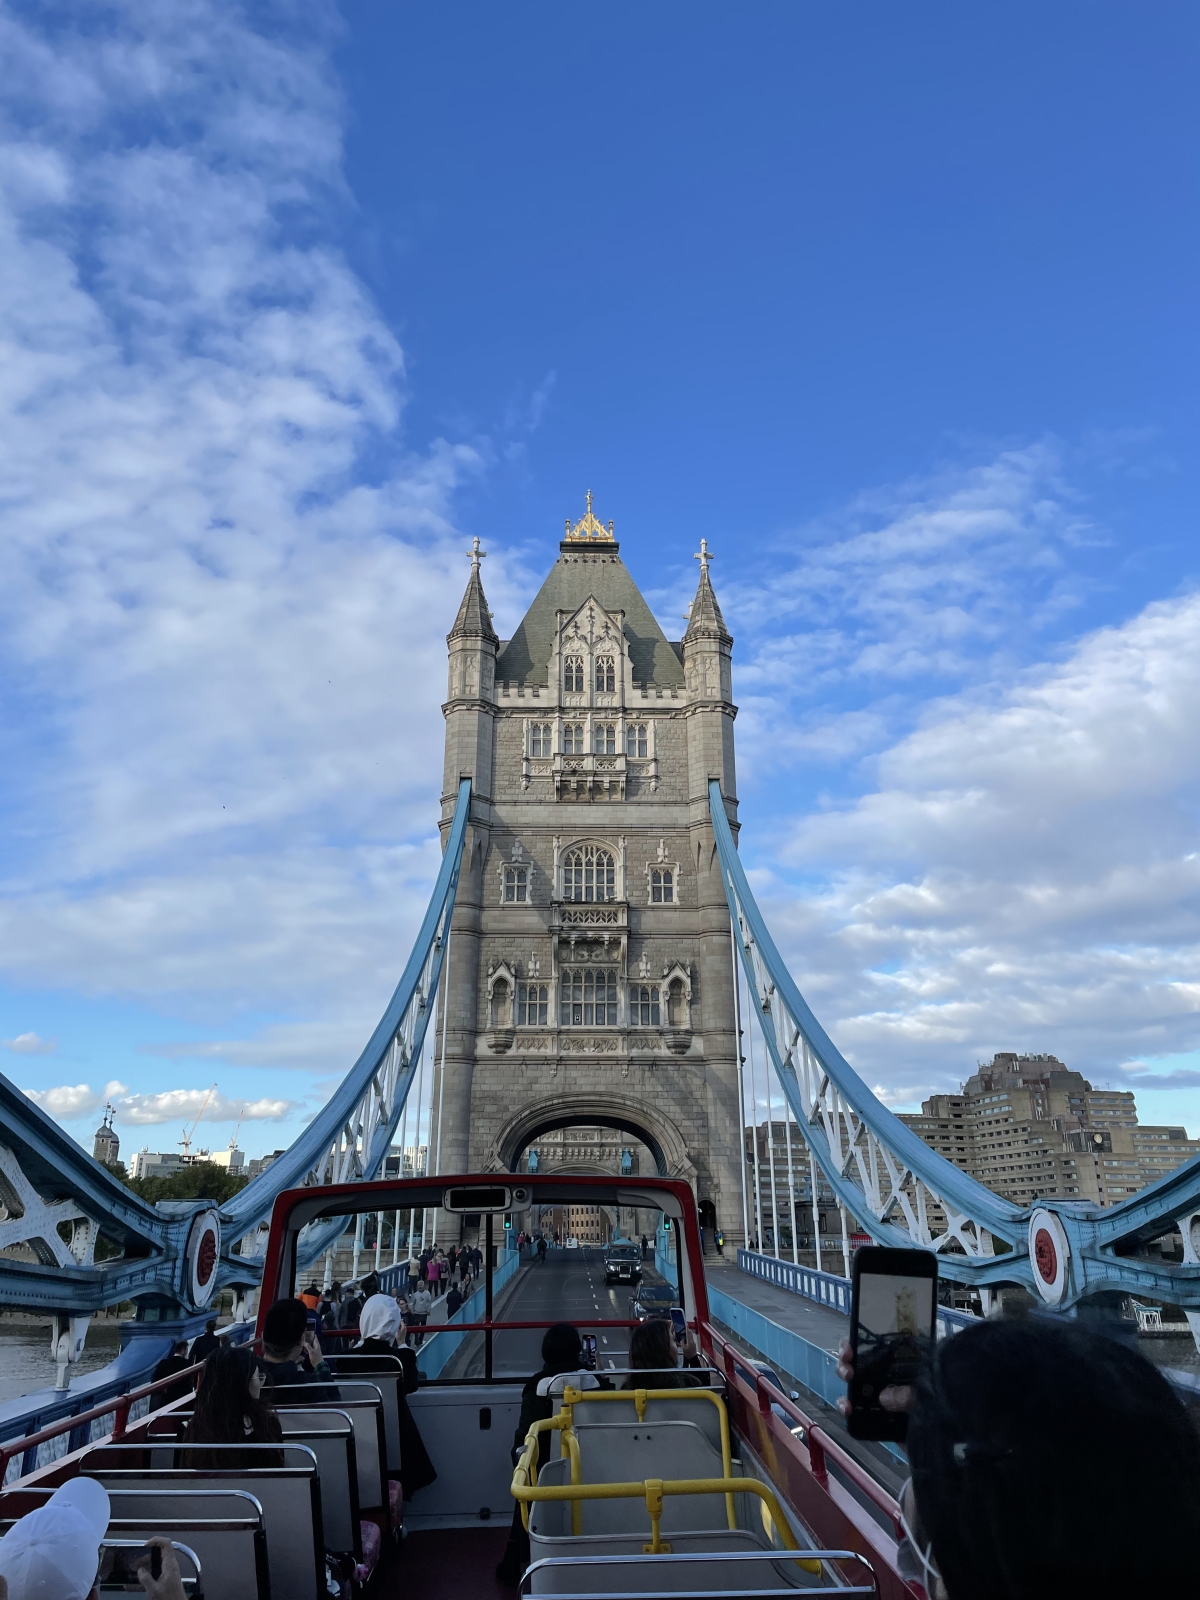 Portrait shot of Tower Bridge in London, United Kingdom